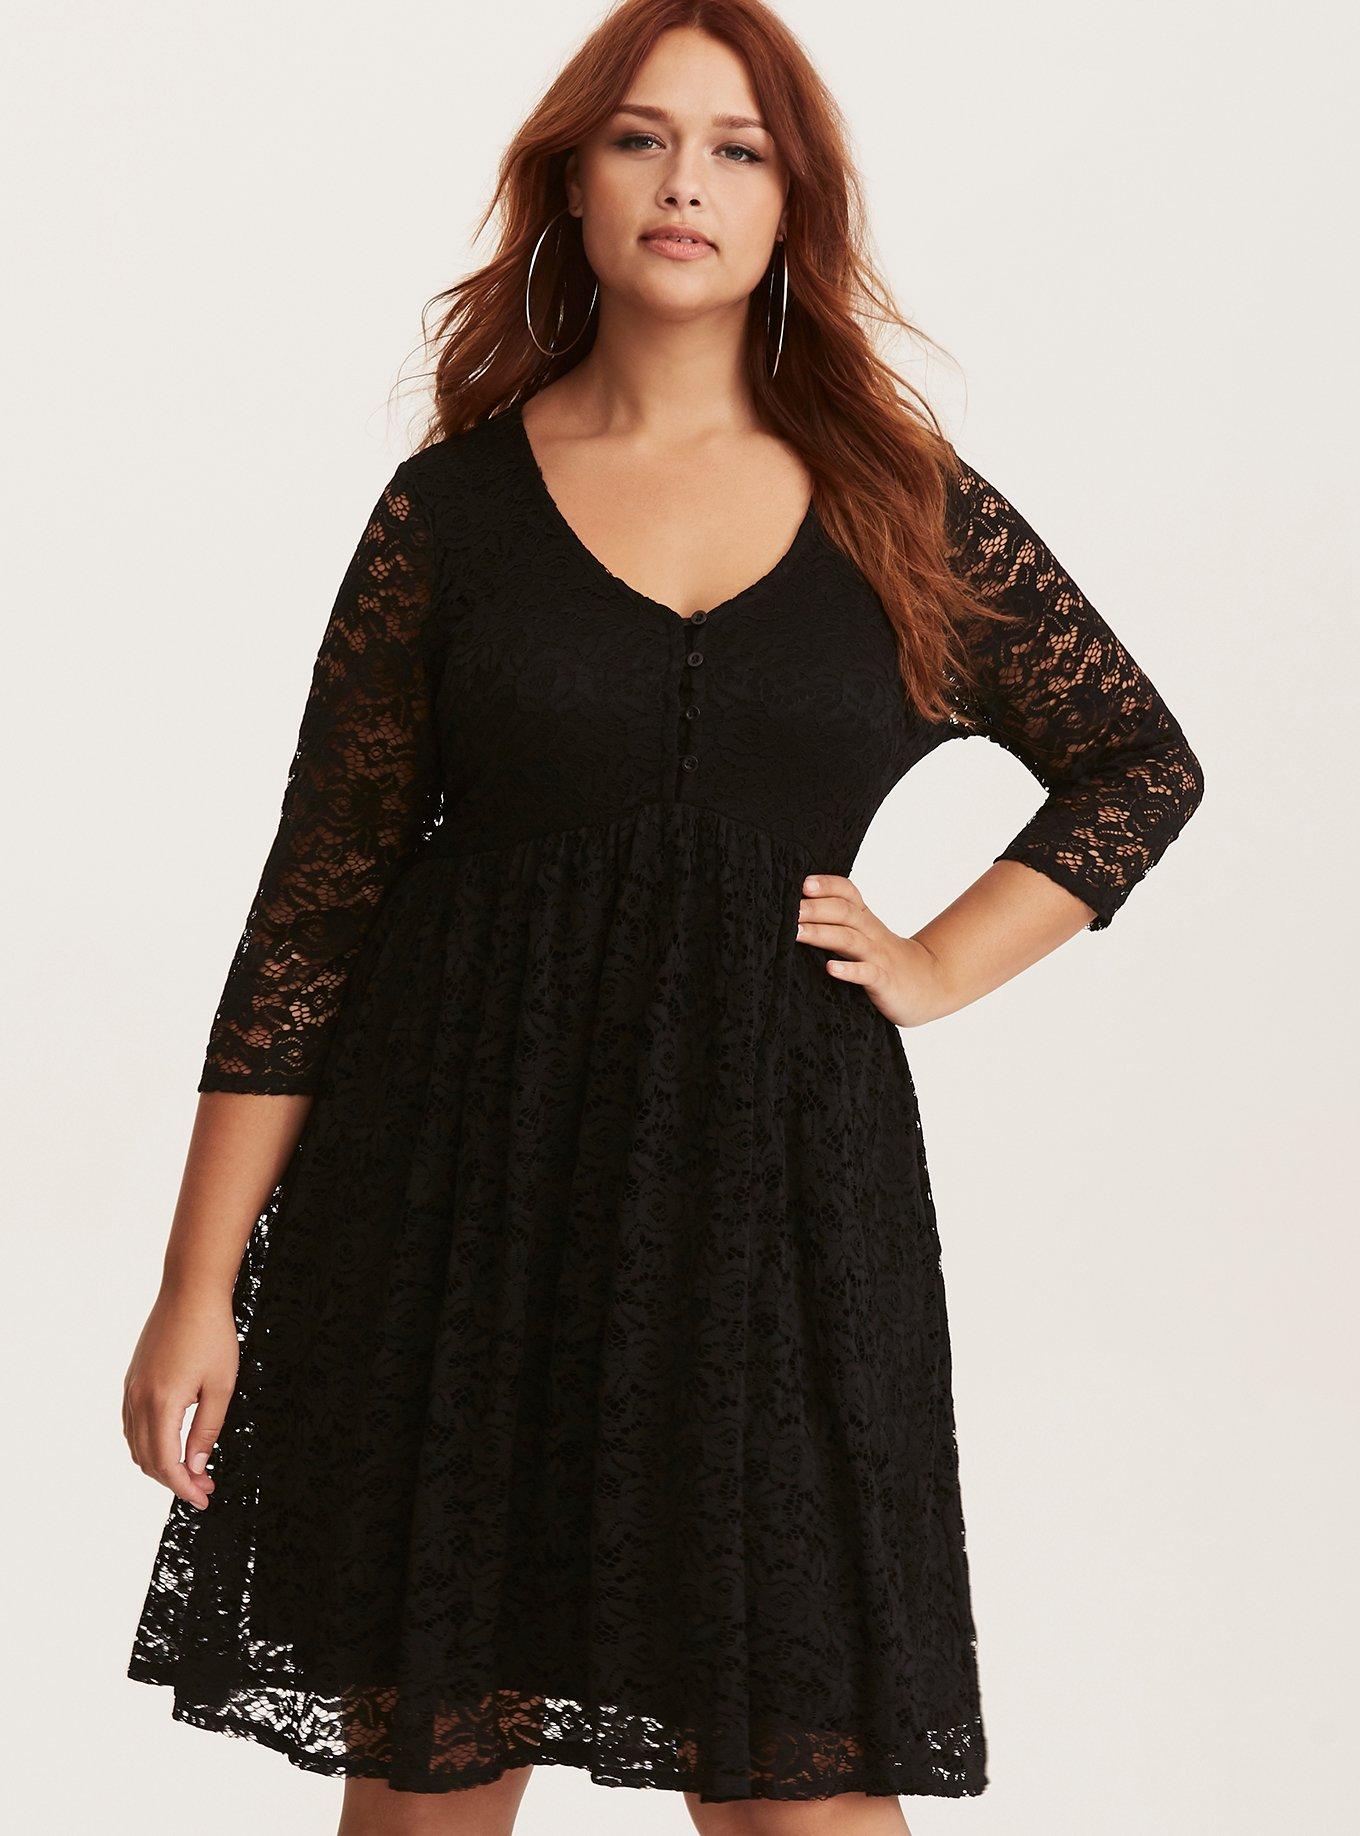 Plus Size - Black Lace Babydoll Dress - Torrid